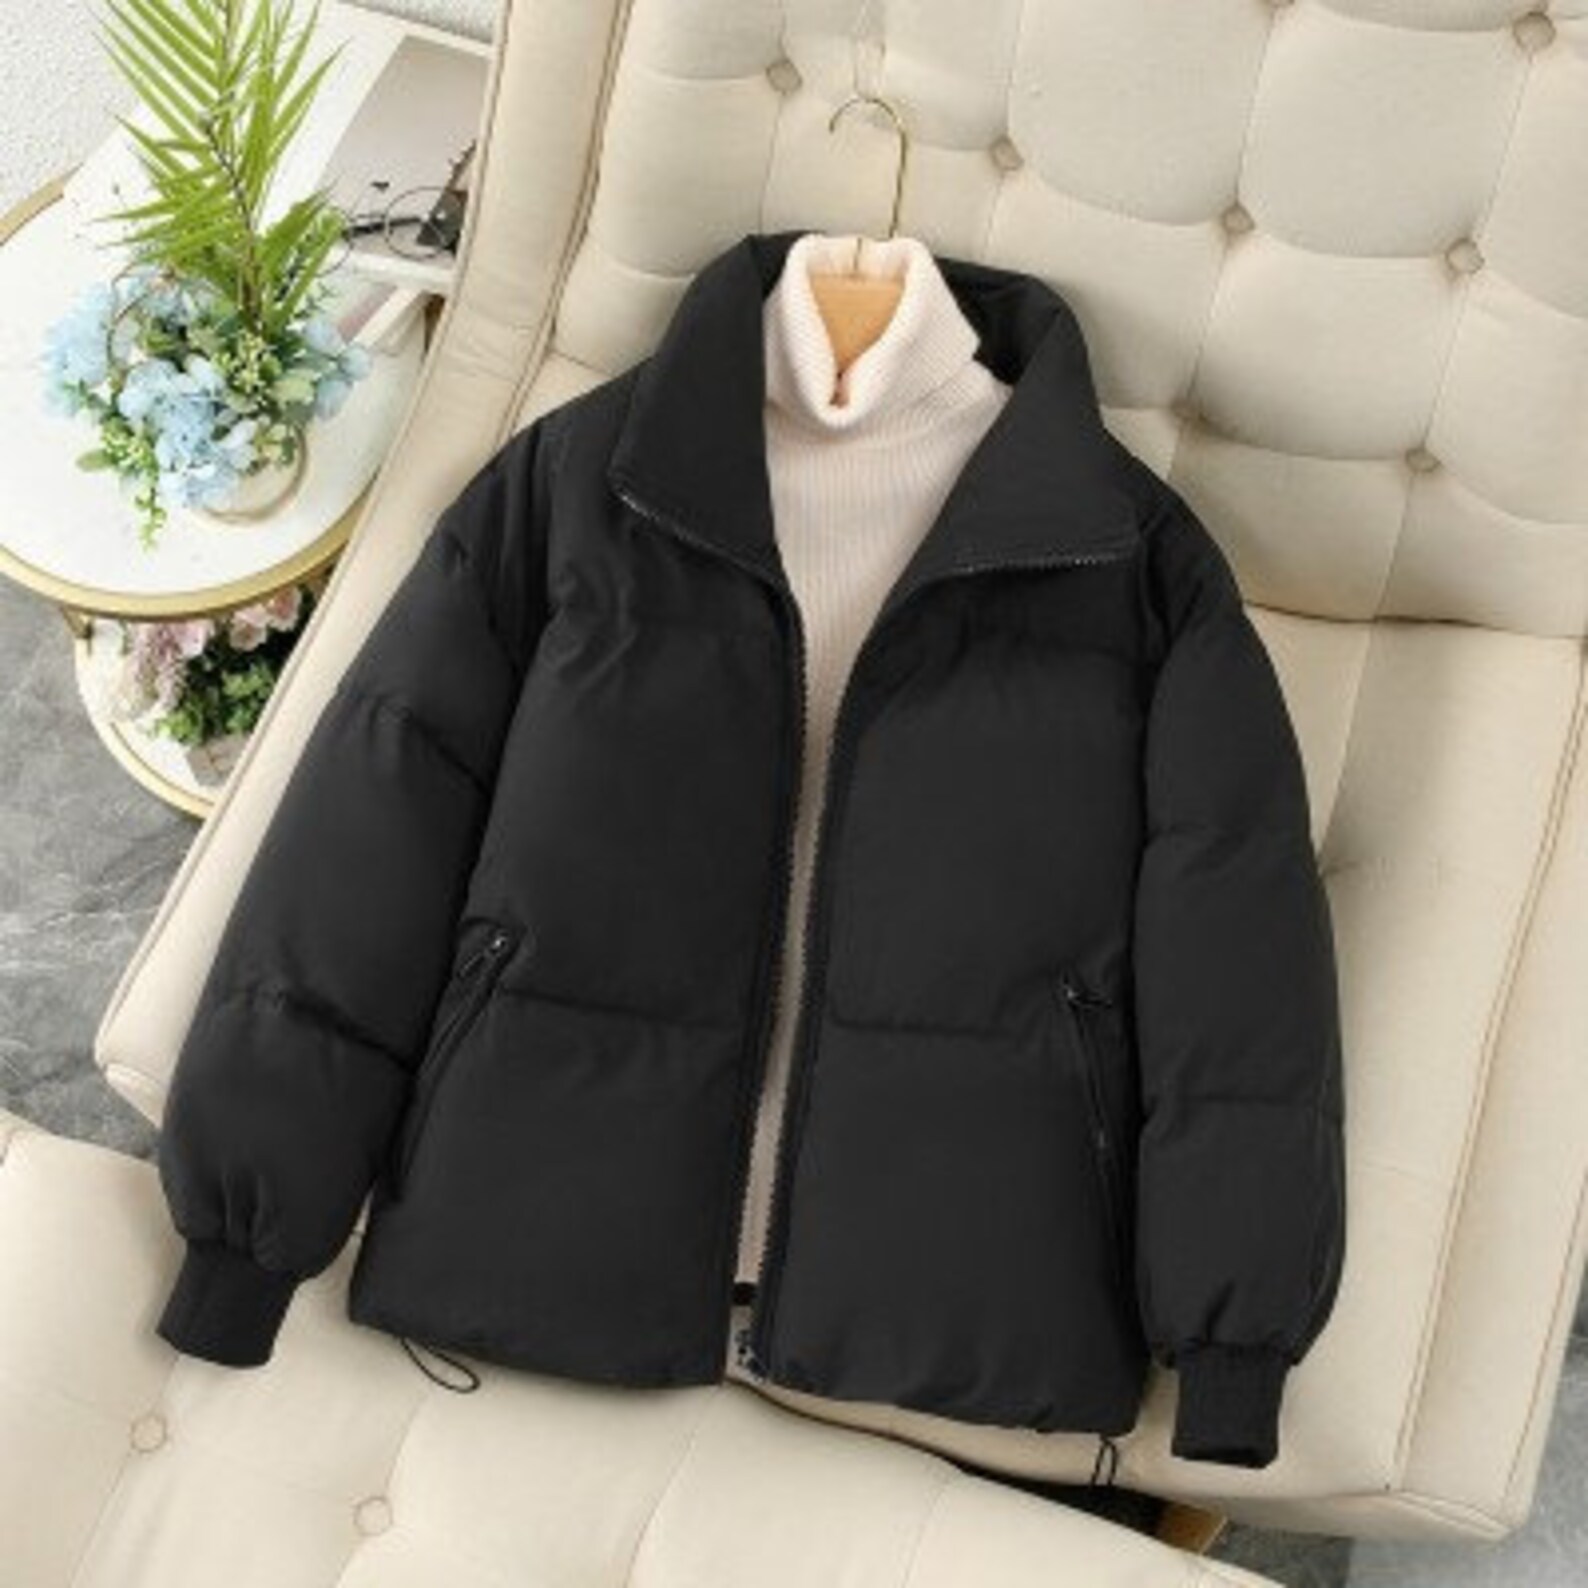 Stylish Black Short Parka Jacket for Women Winter Wear - Etsy